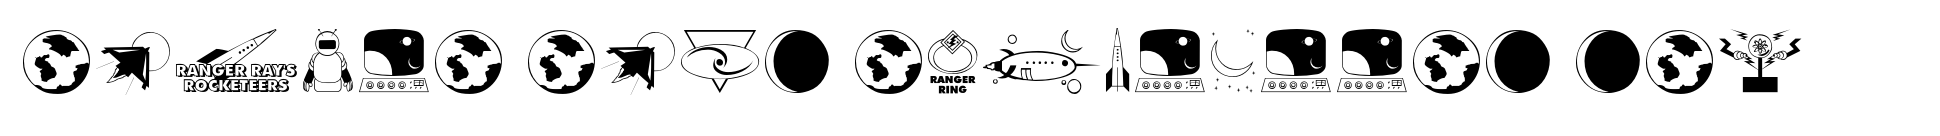 Ranger Rays Rocketeers SRF